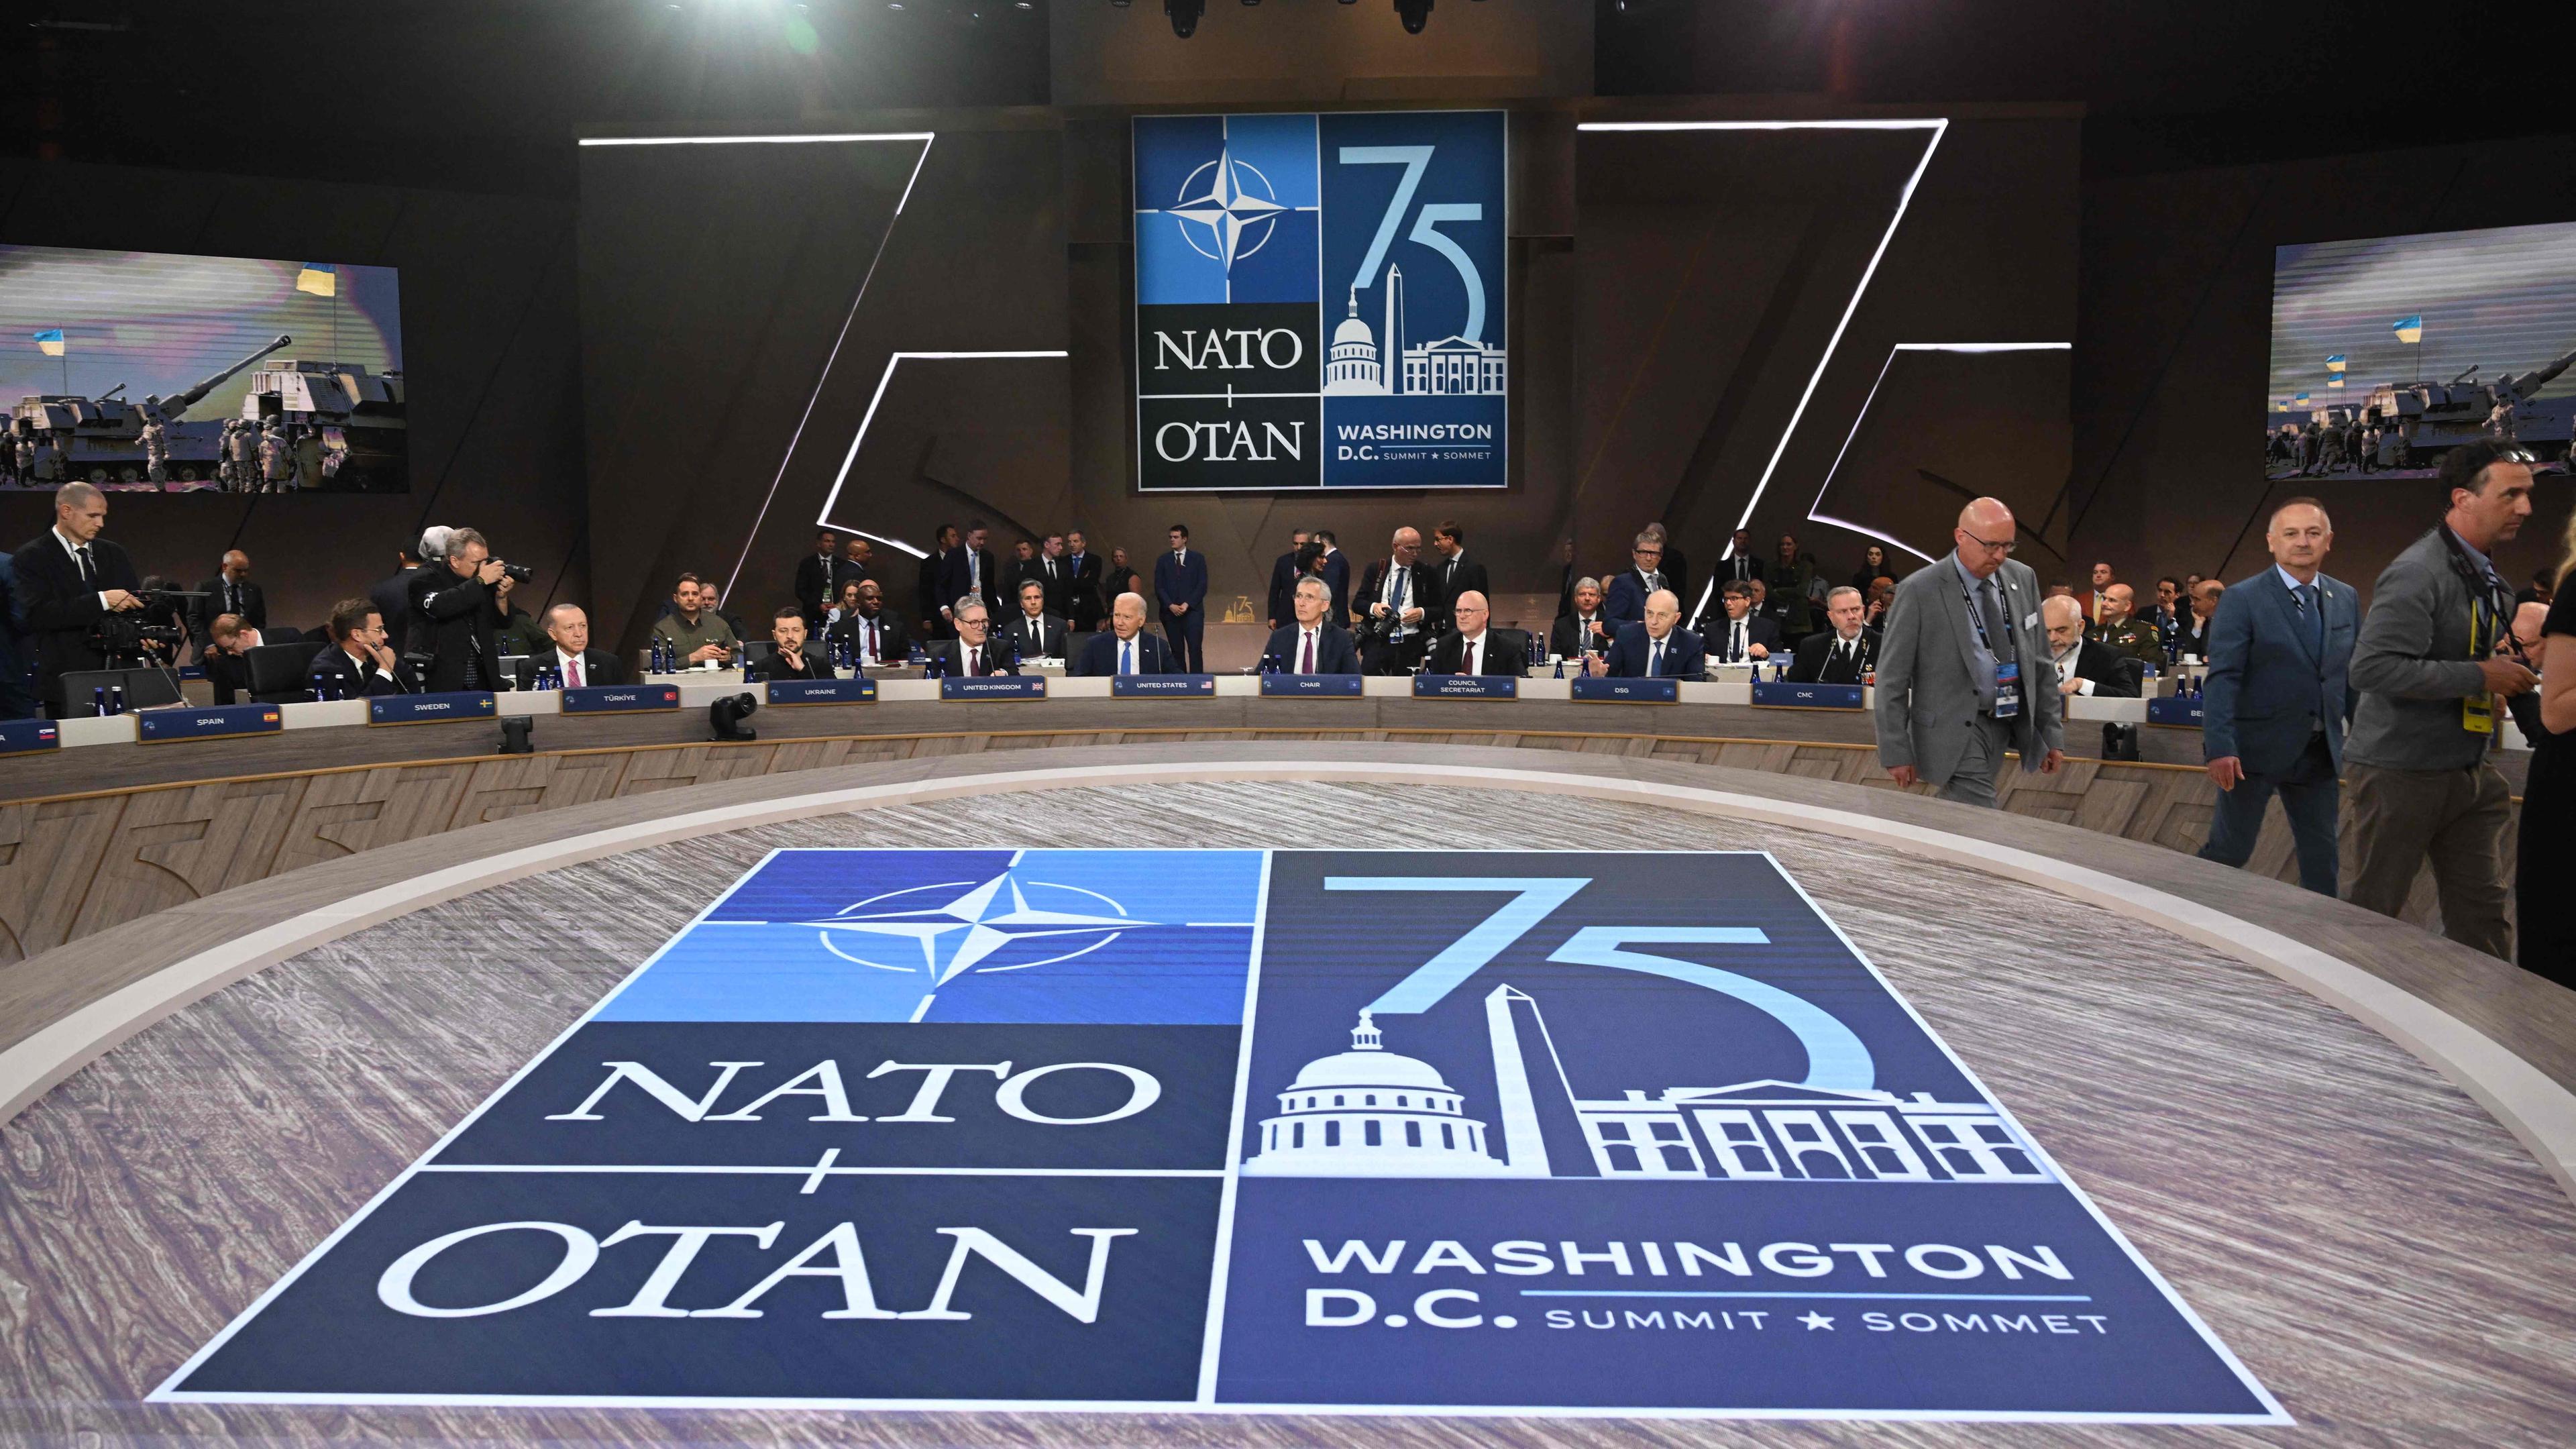 NATO 75th anniversary summit